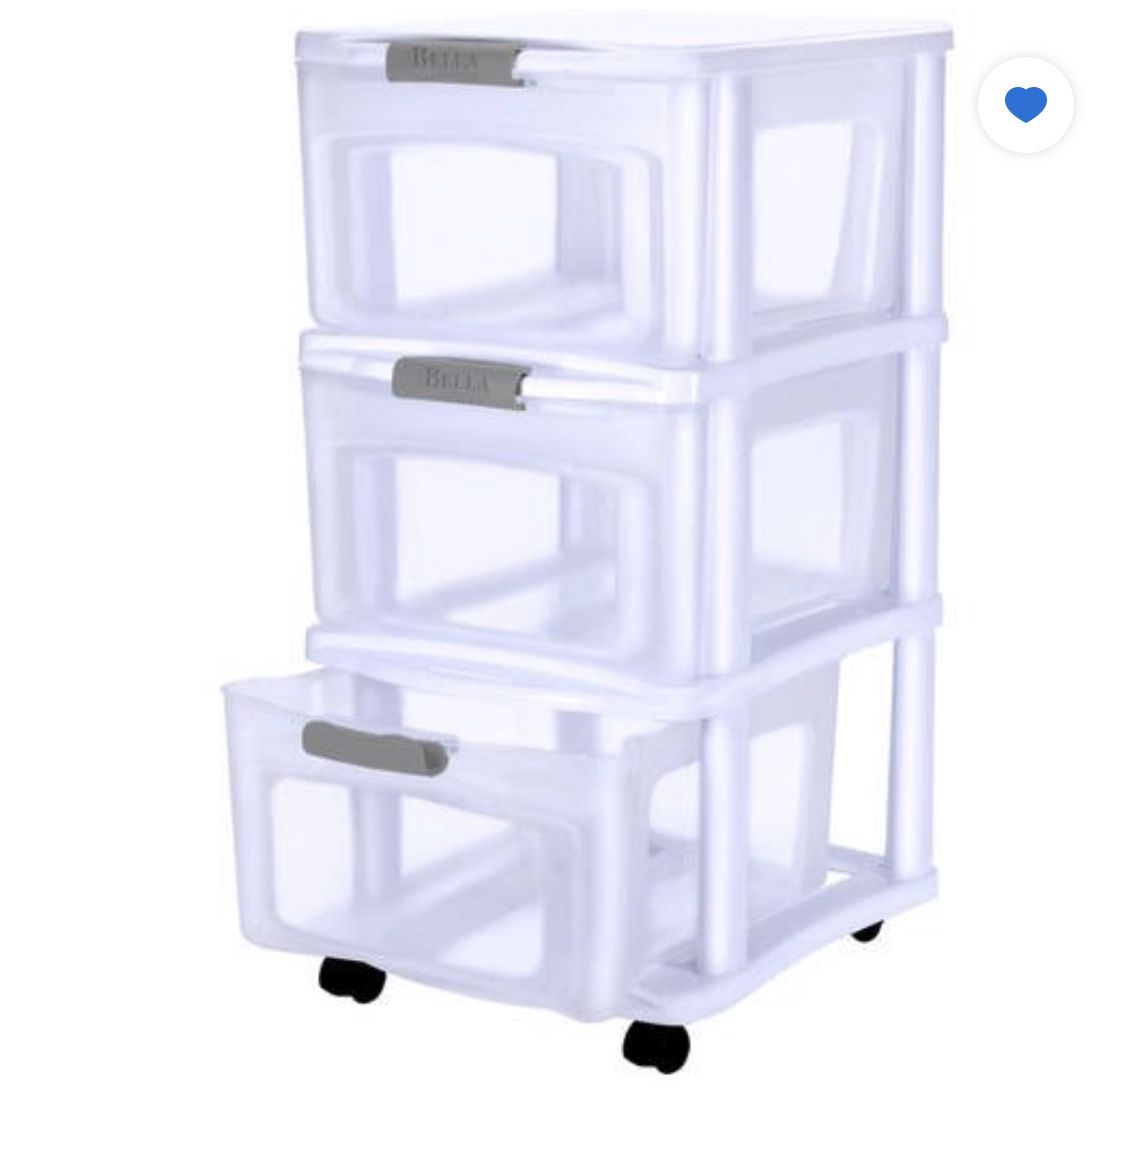 2 Storage Bin Drawer Carts